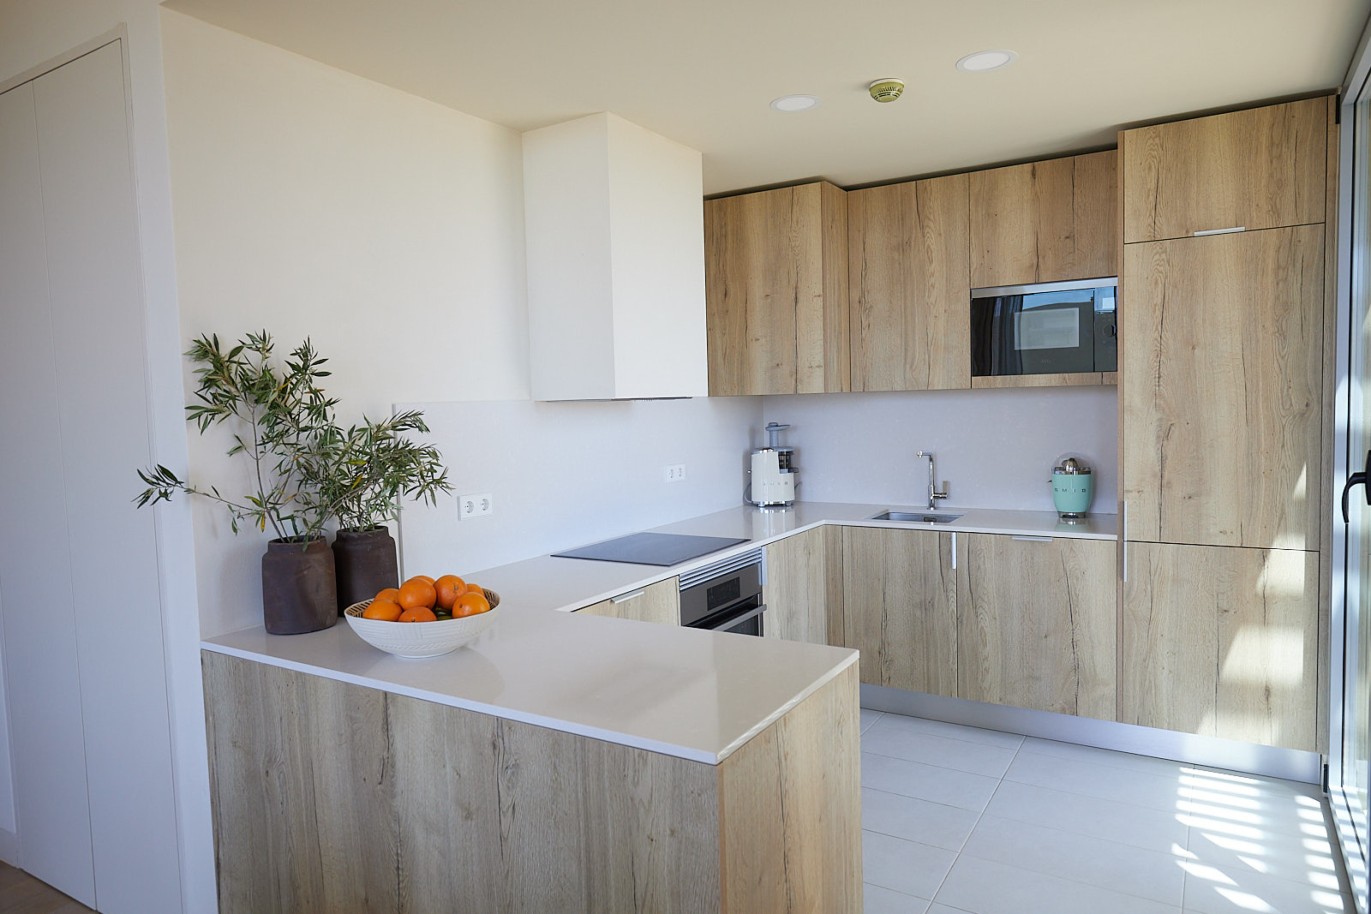 2 bedroom apartment in resort, for sale in Porches, Algarve_229200